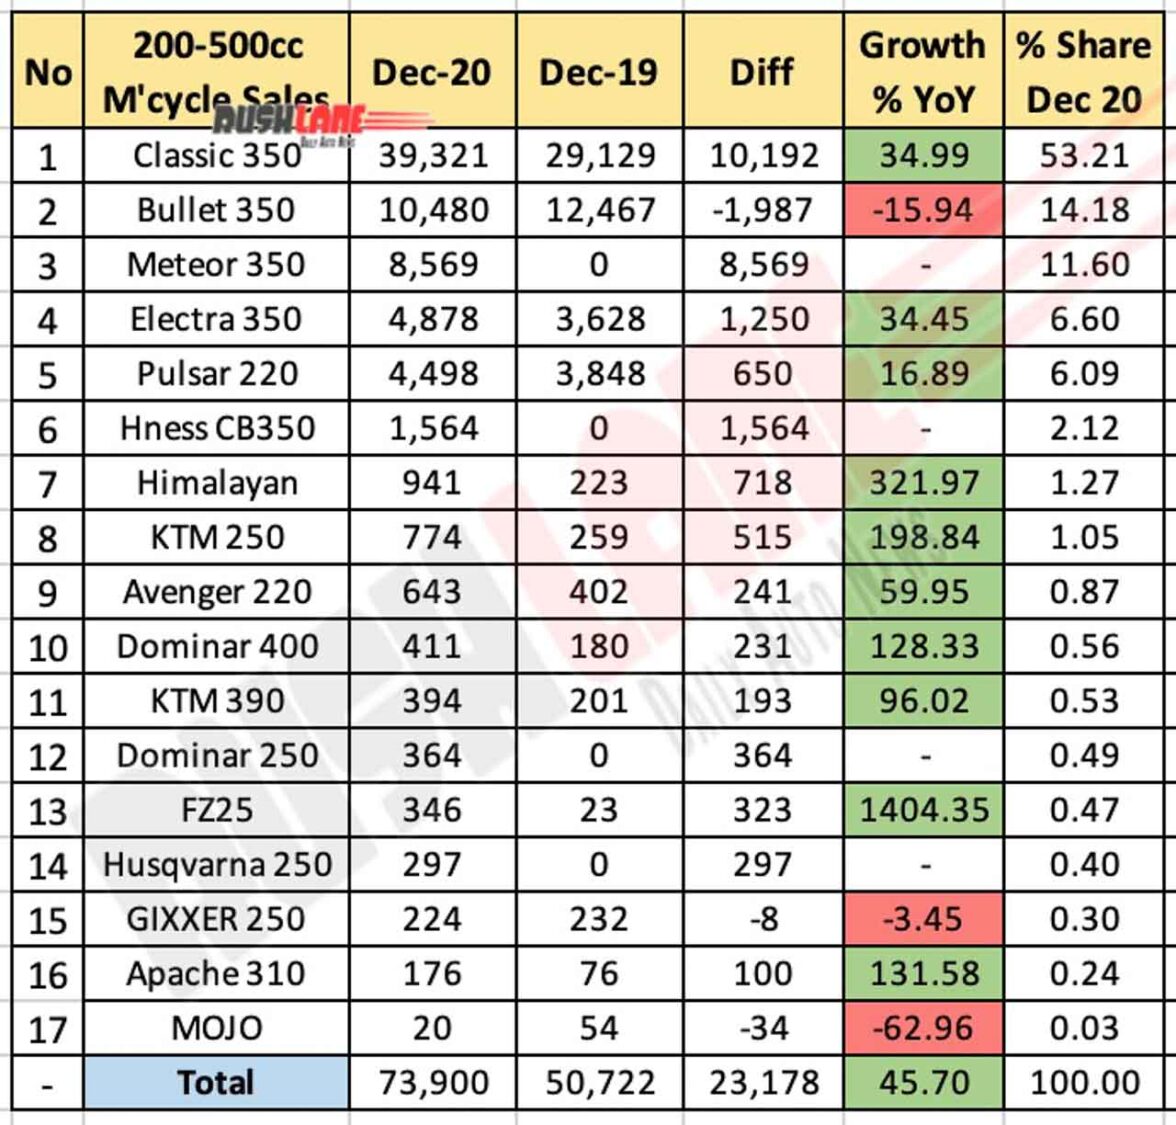 Motorcycle sales (200cc-500cc) segment for Dec 2020